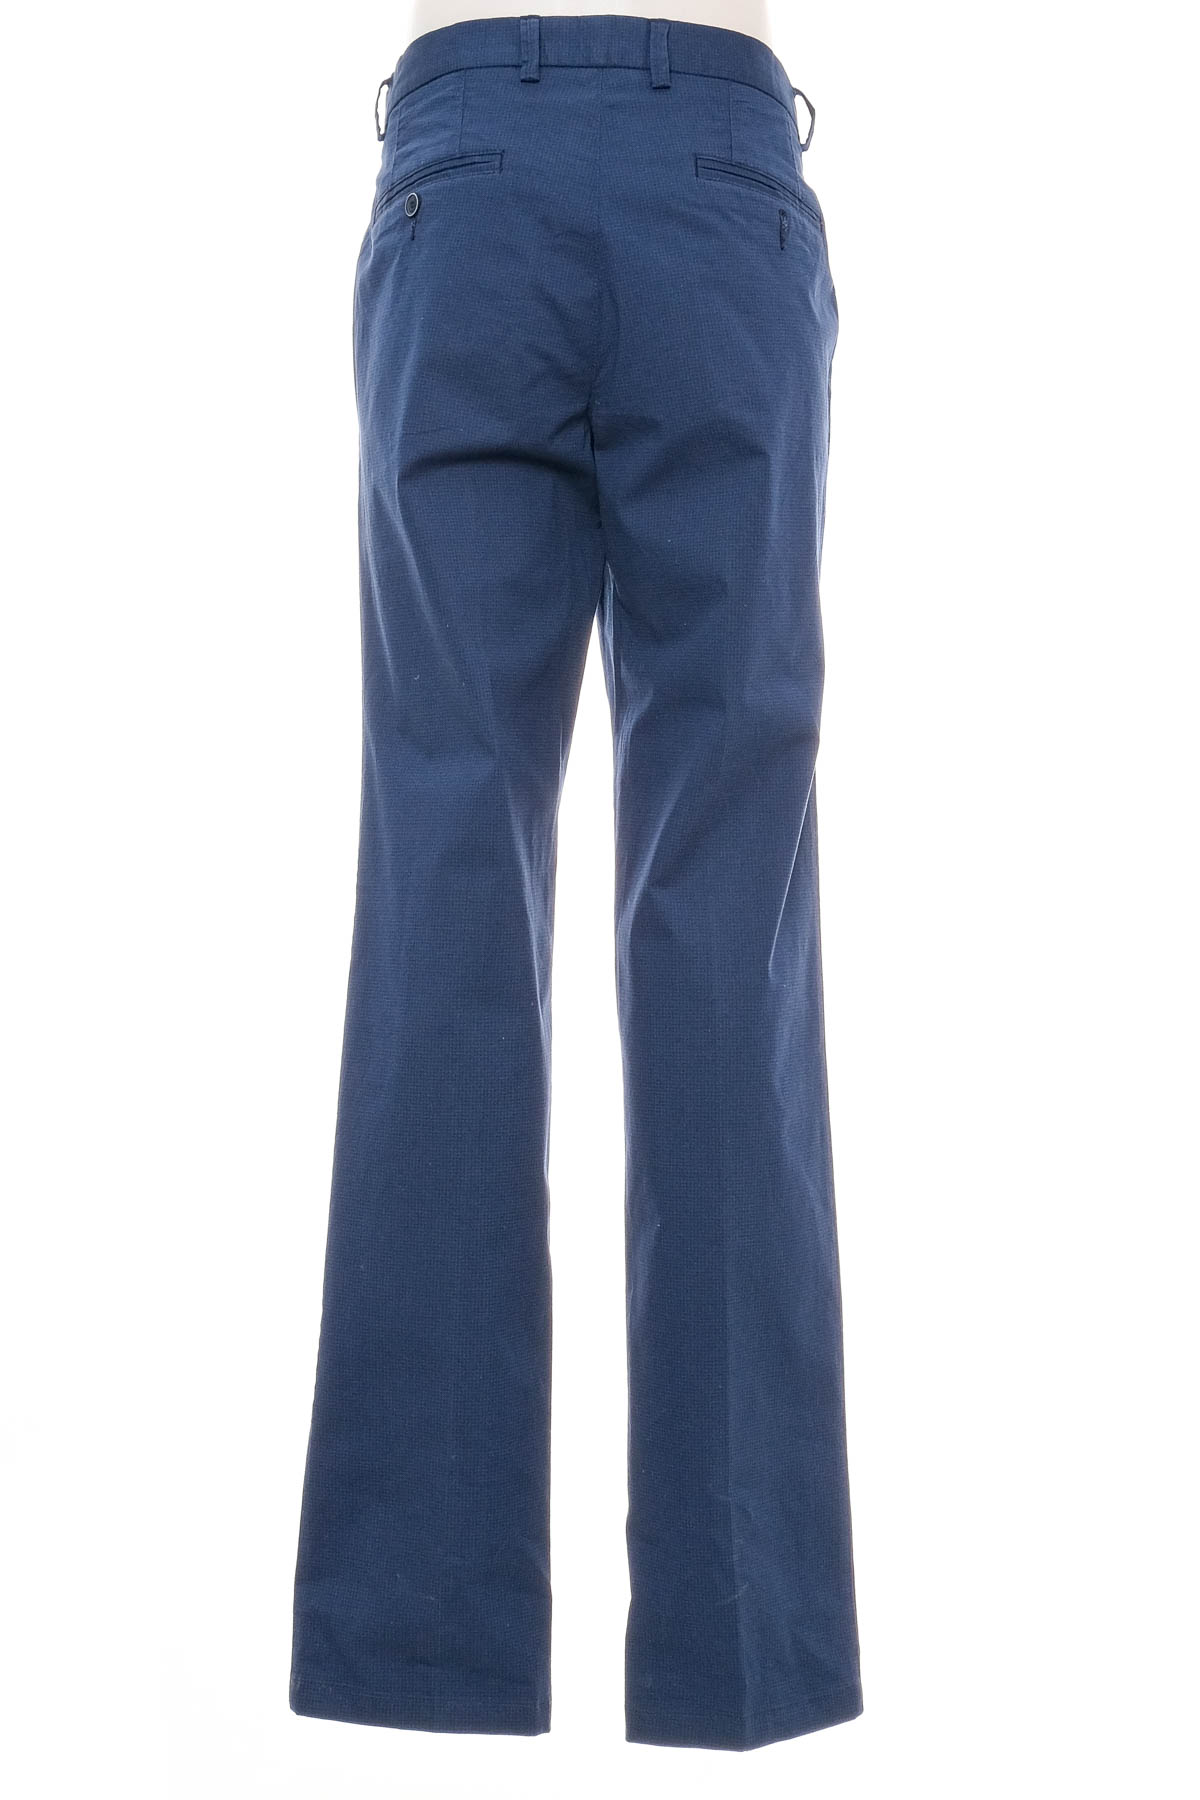 Men's trousers - BONITO SPORT - 1